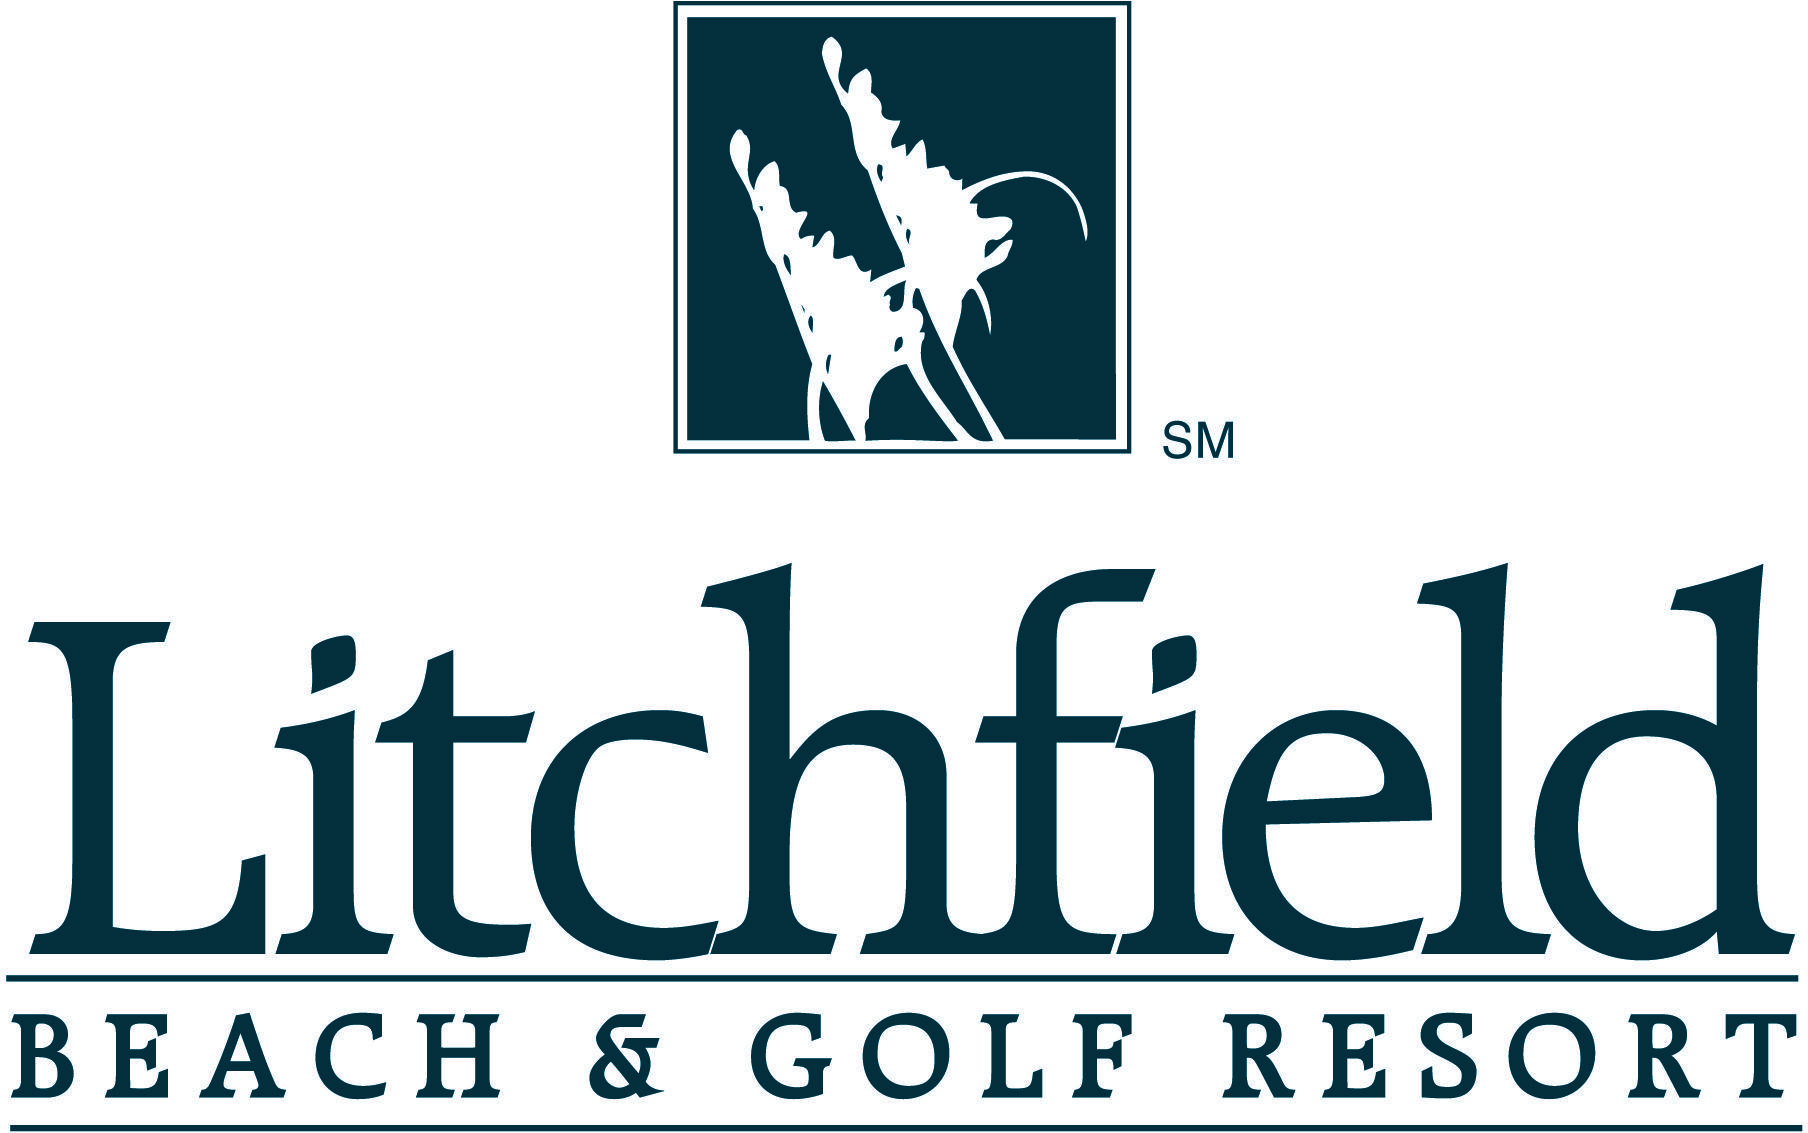 Litchfield Logo - Litchfield Beach and Golf Resort Coast SC